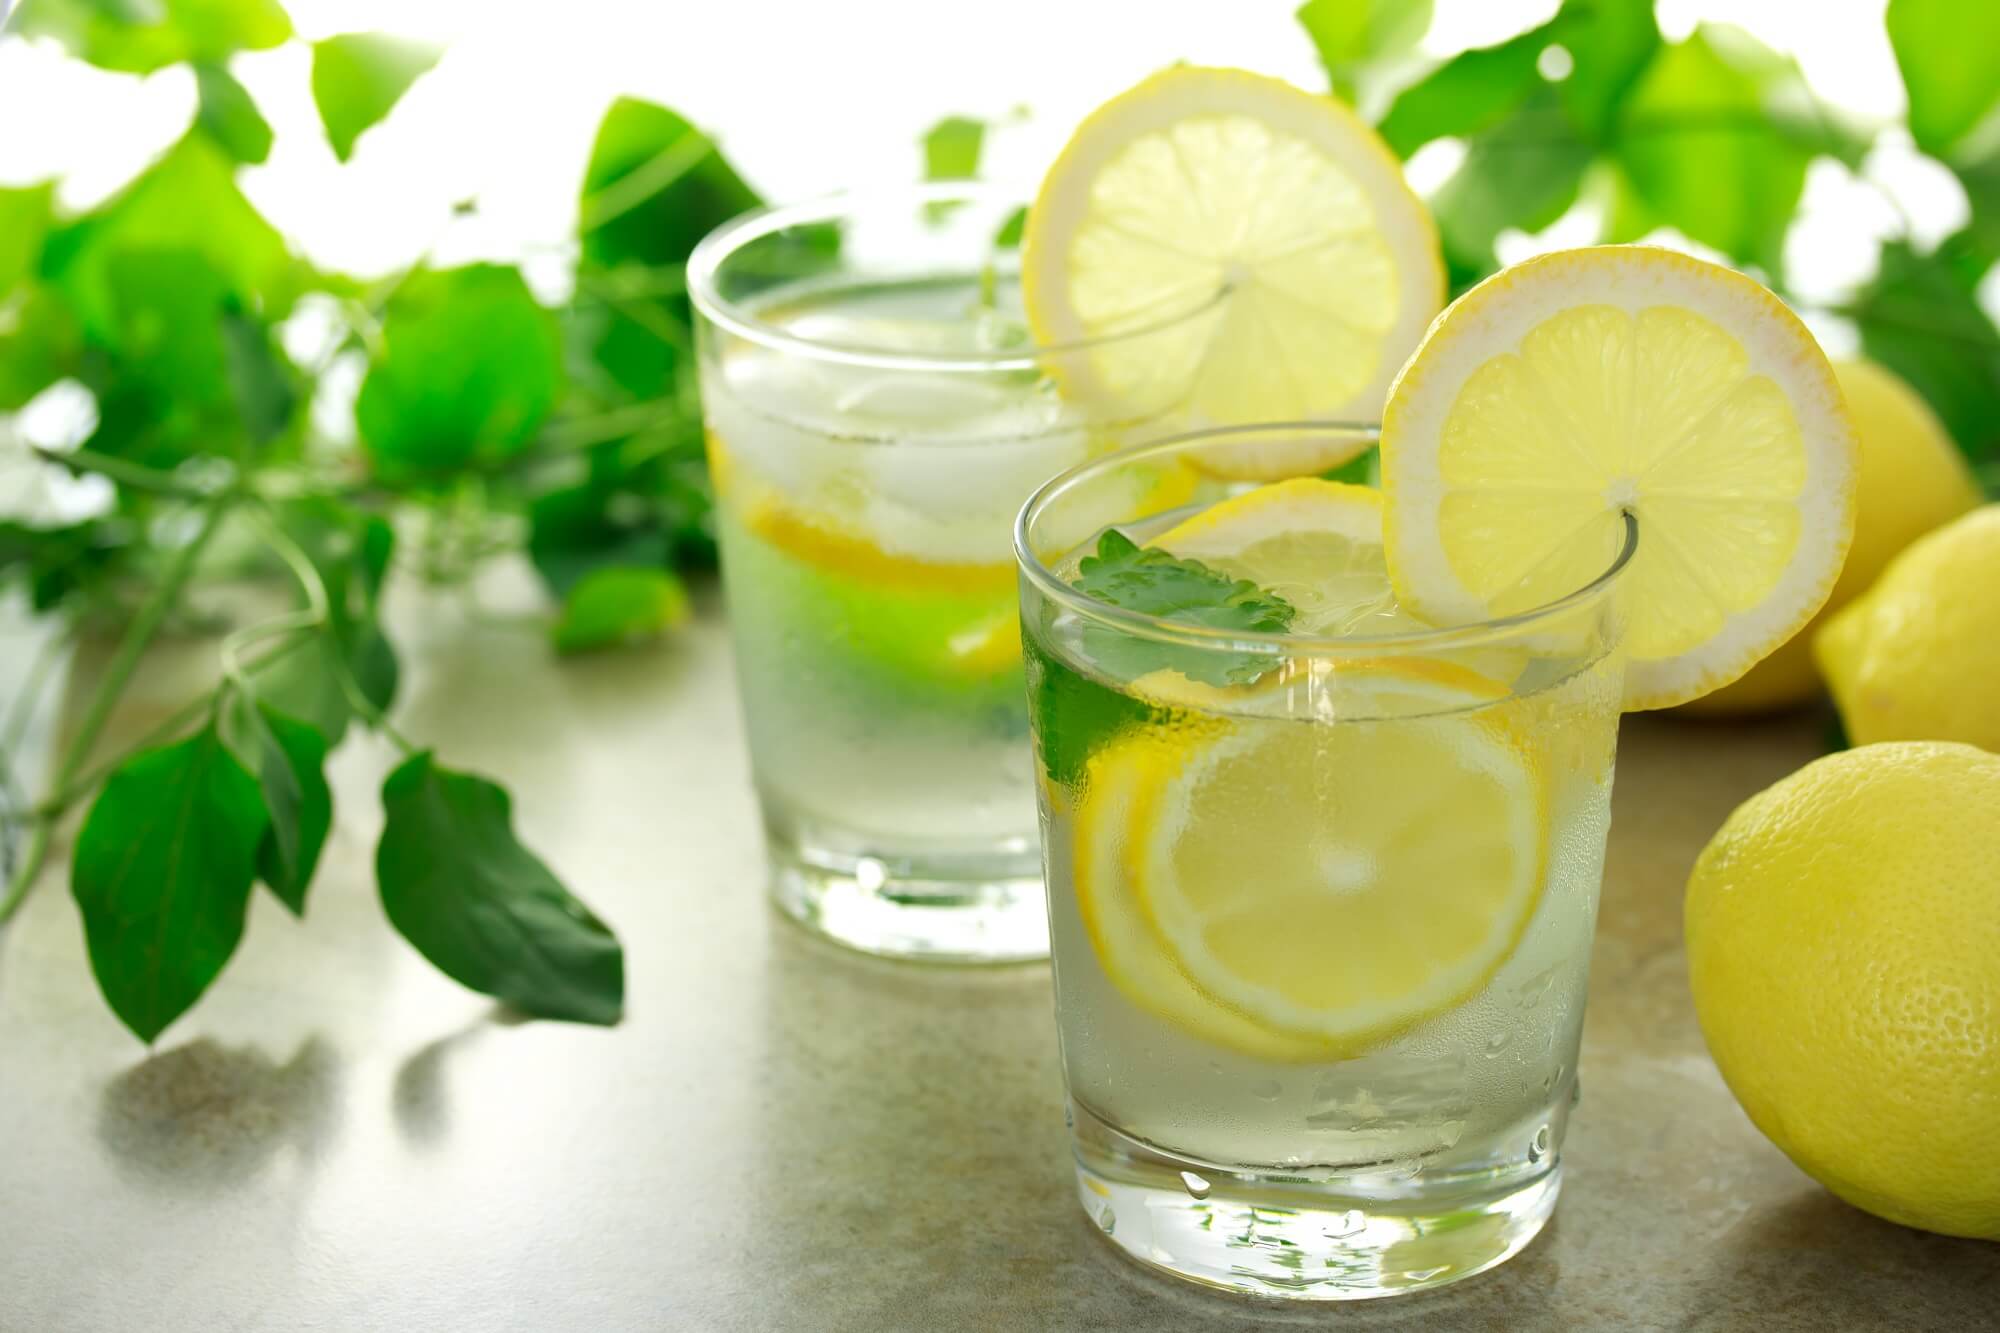 Lemon water with sliced lemons and green herbs / leaves